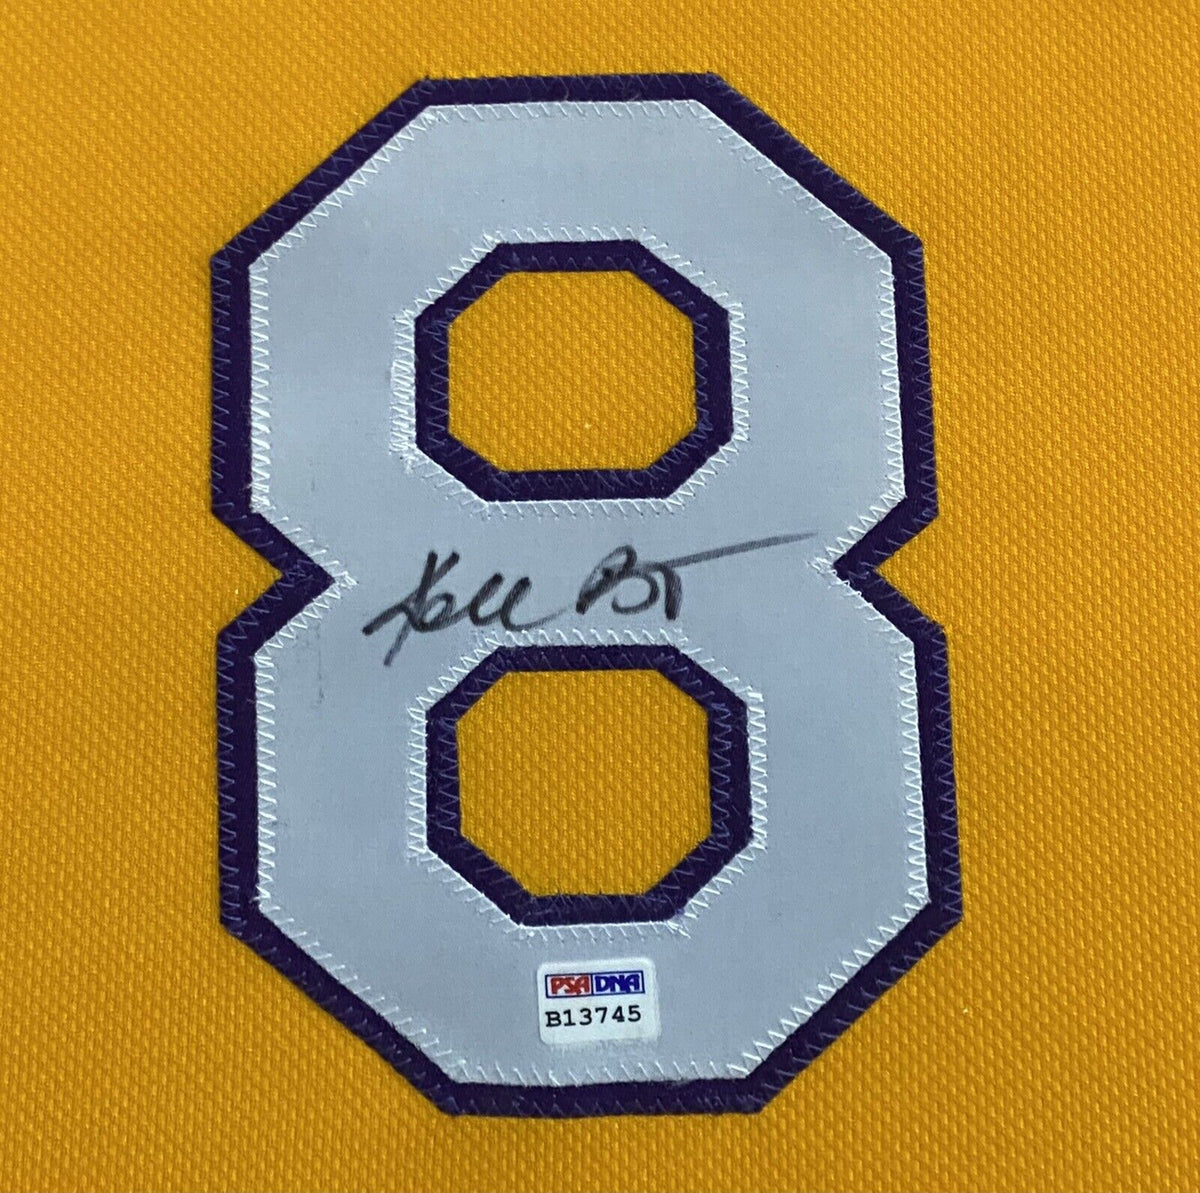 Kobe Bryant # 8 Los Angeles Lakers(Autographed)(Full Name)Framed Jersey(PSA/COA)